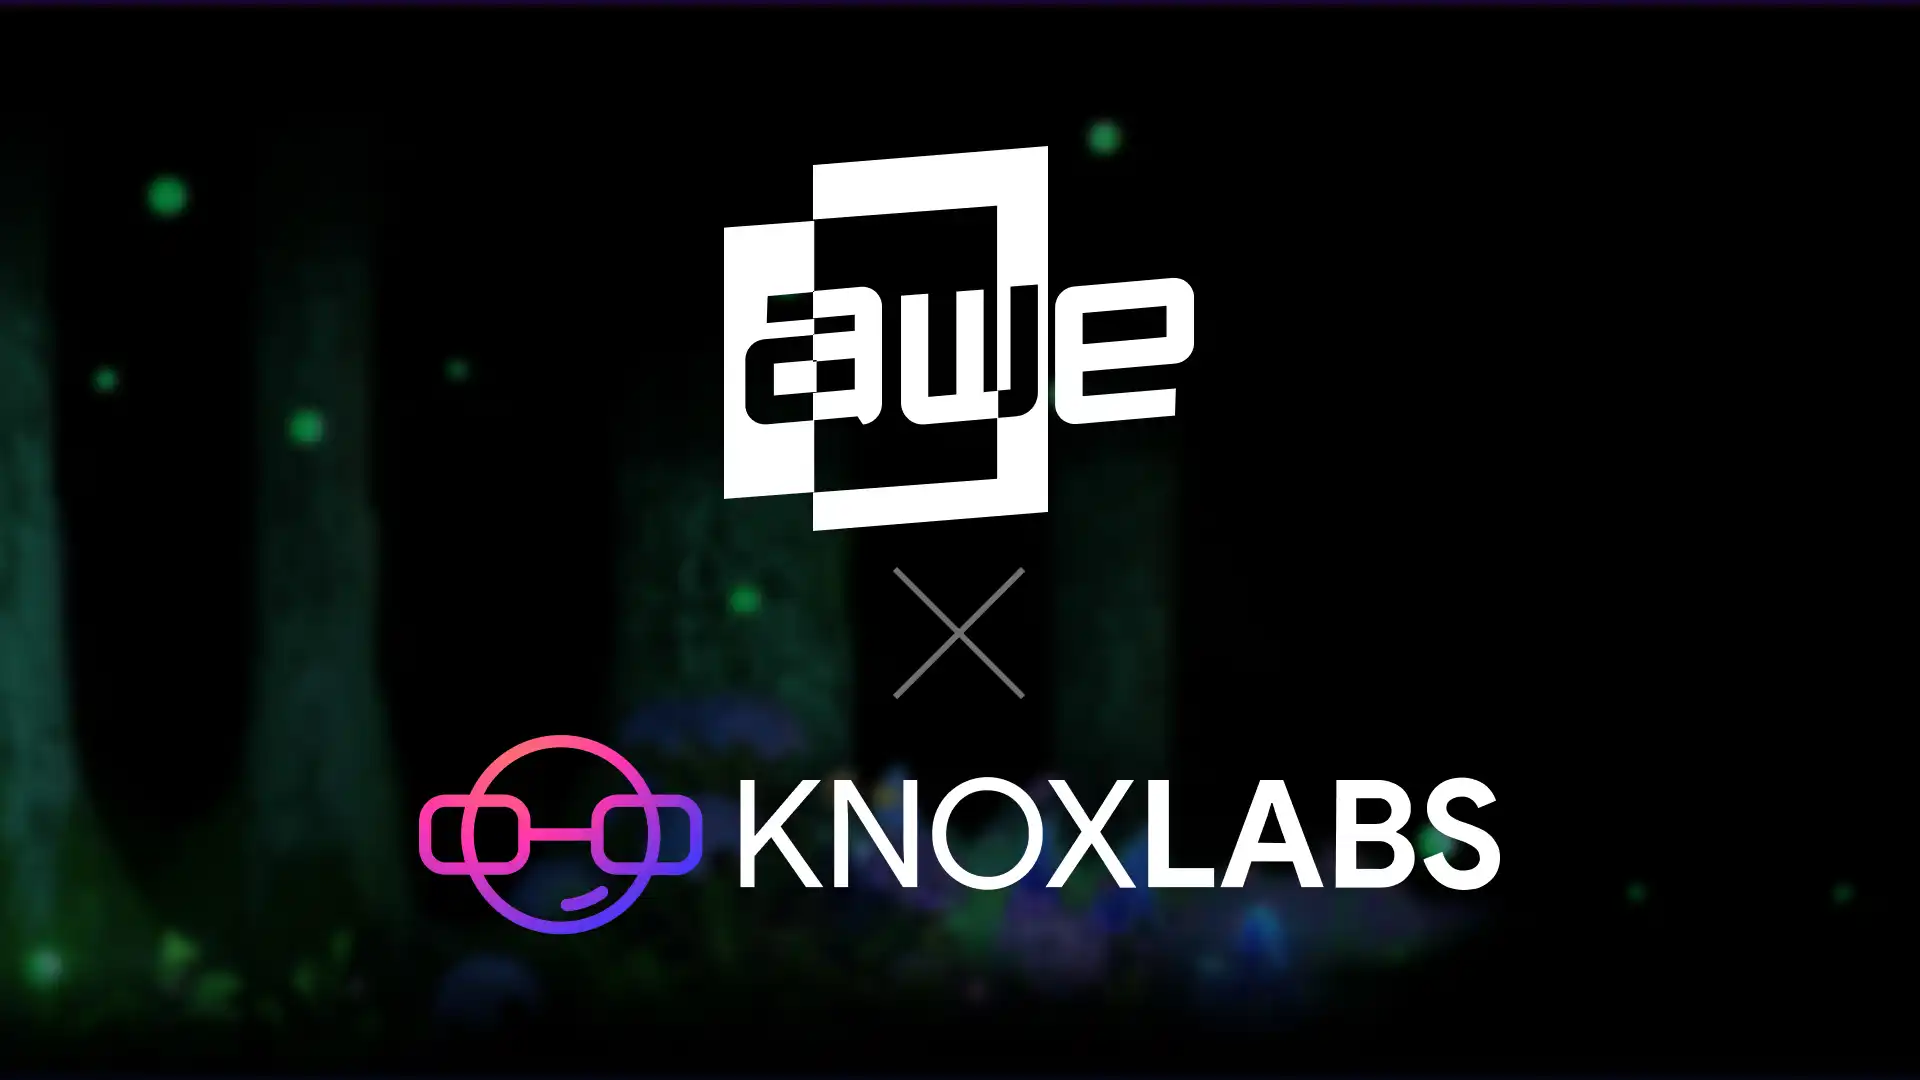 AWE and Knoxlabs logos